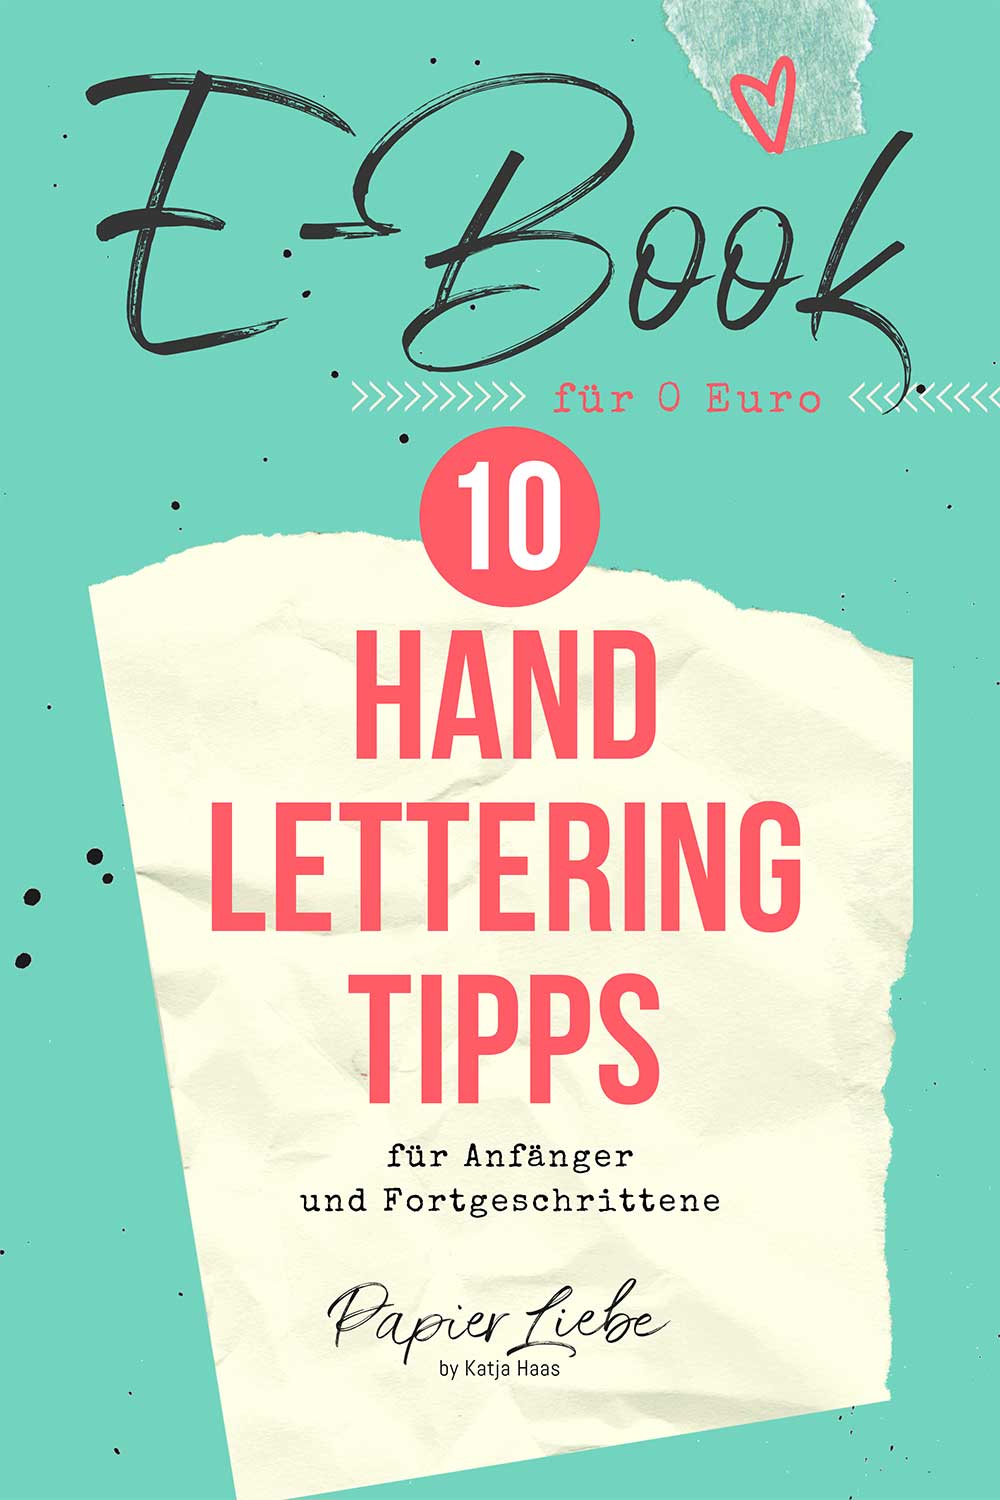 E-Book: 10 Handlettering-Tipps für Anfänger und Fortgeschrittene